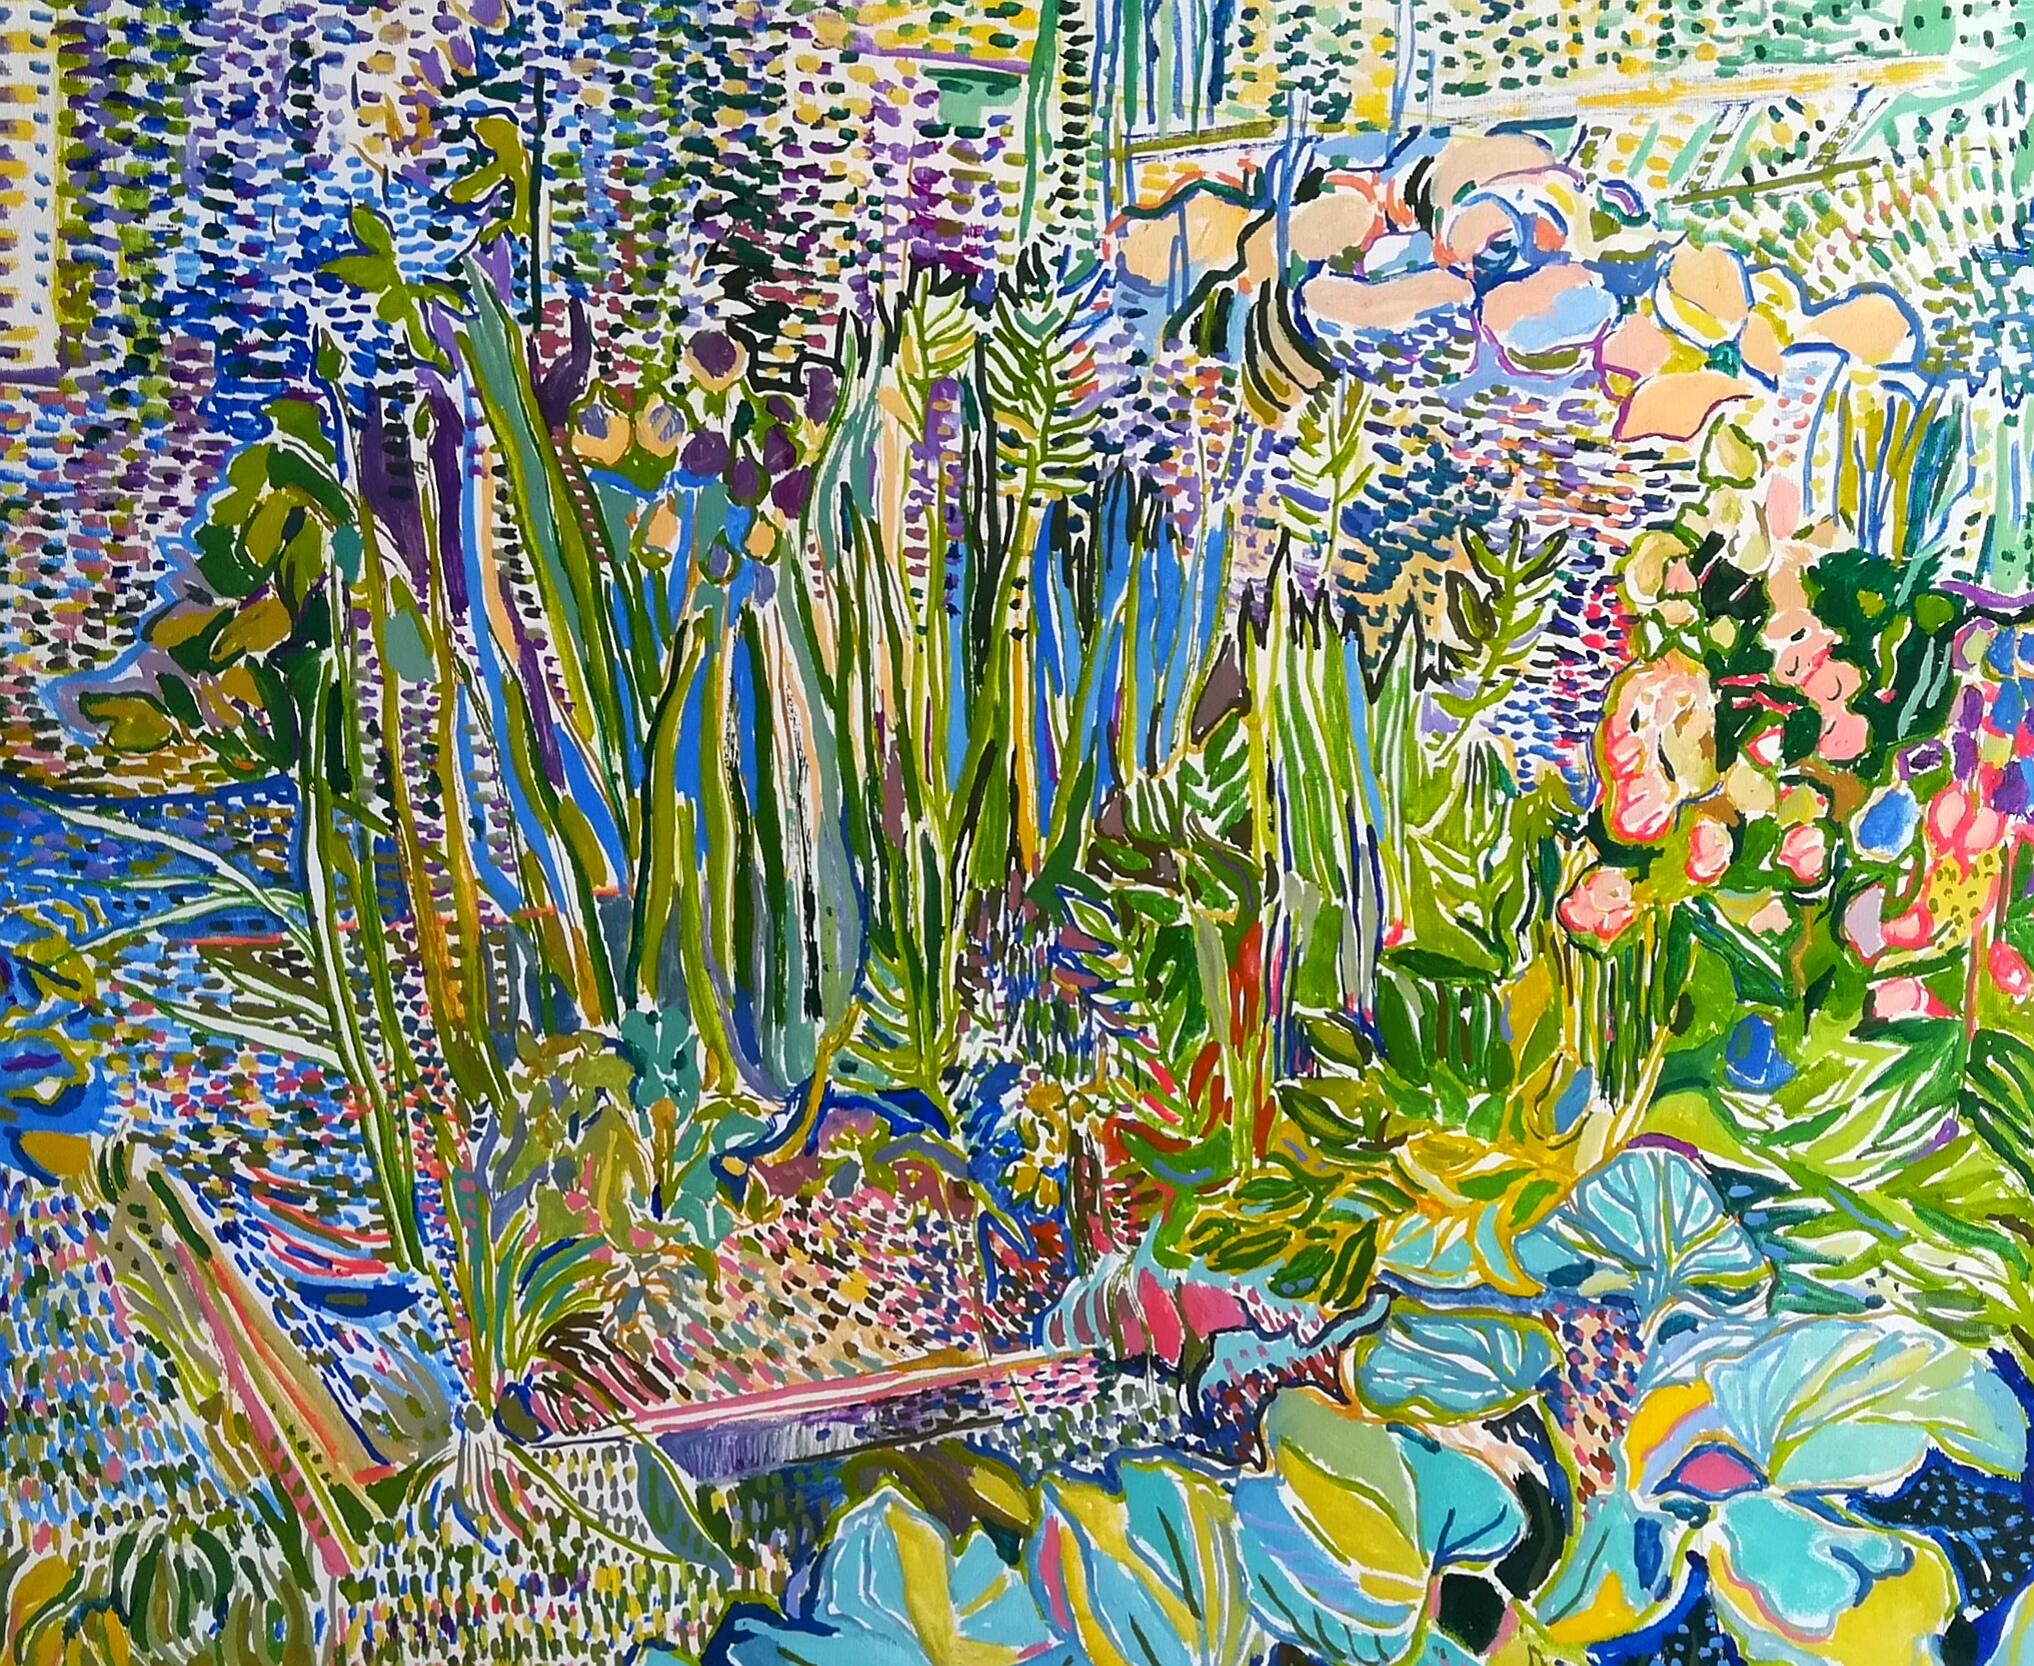 Gardening Landscape - 21st Century Contemporary Pointillism Nature Oil Painting